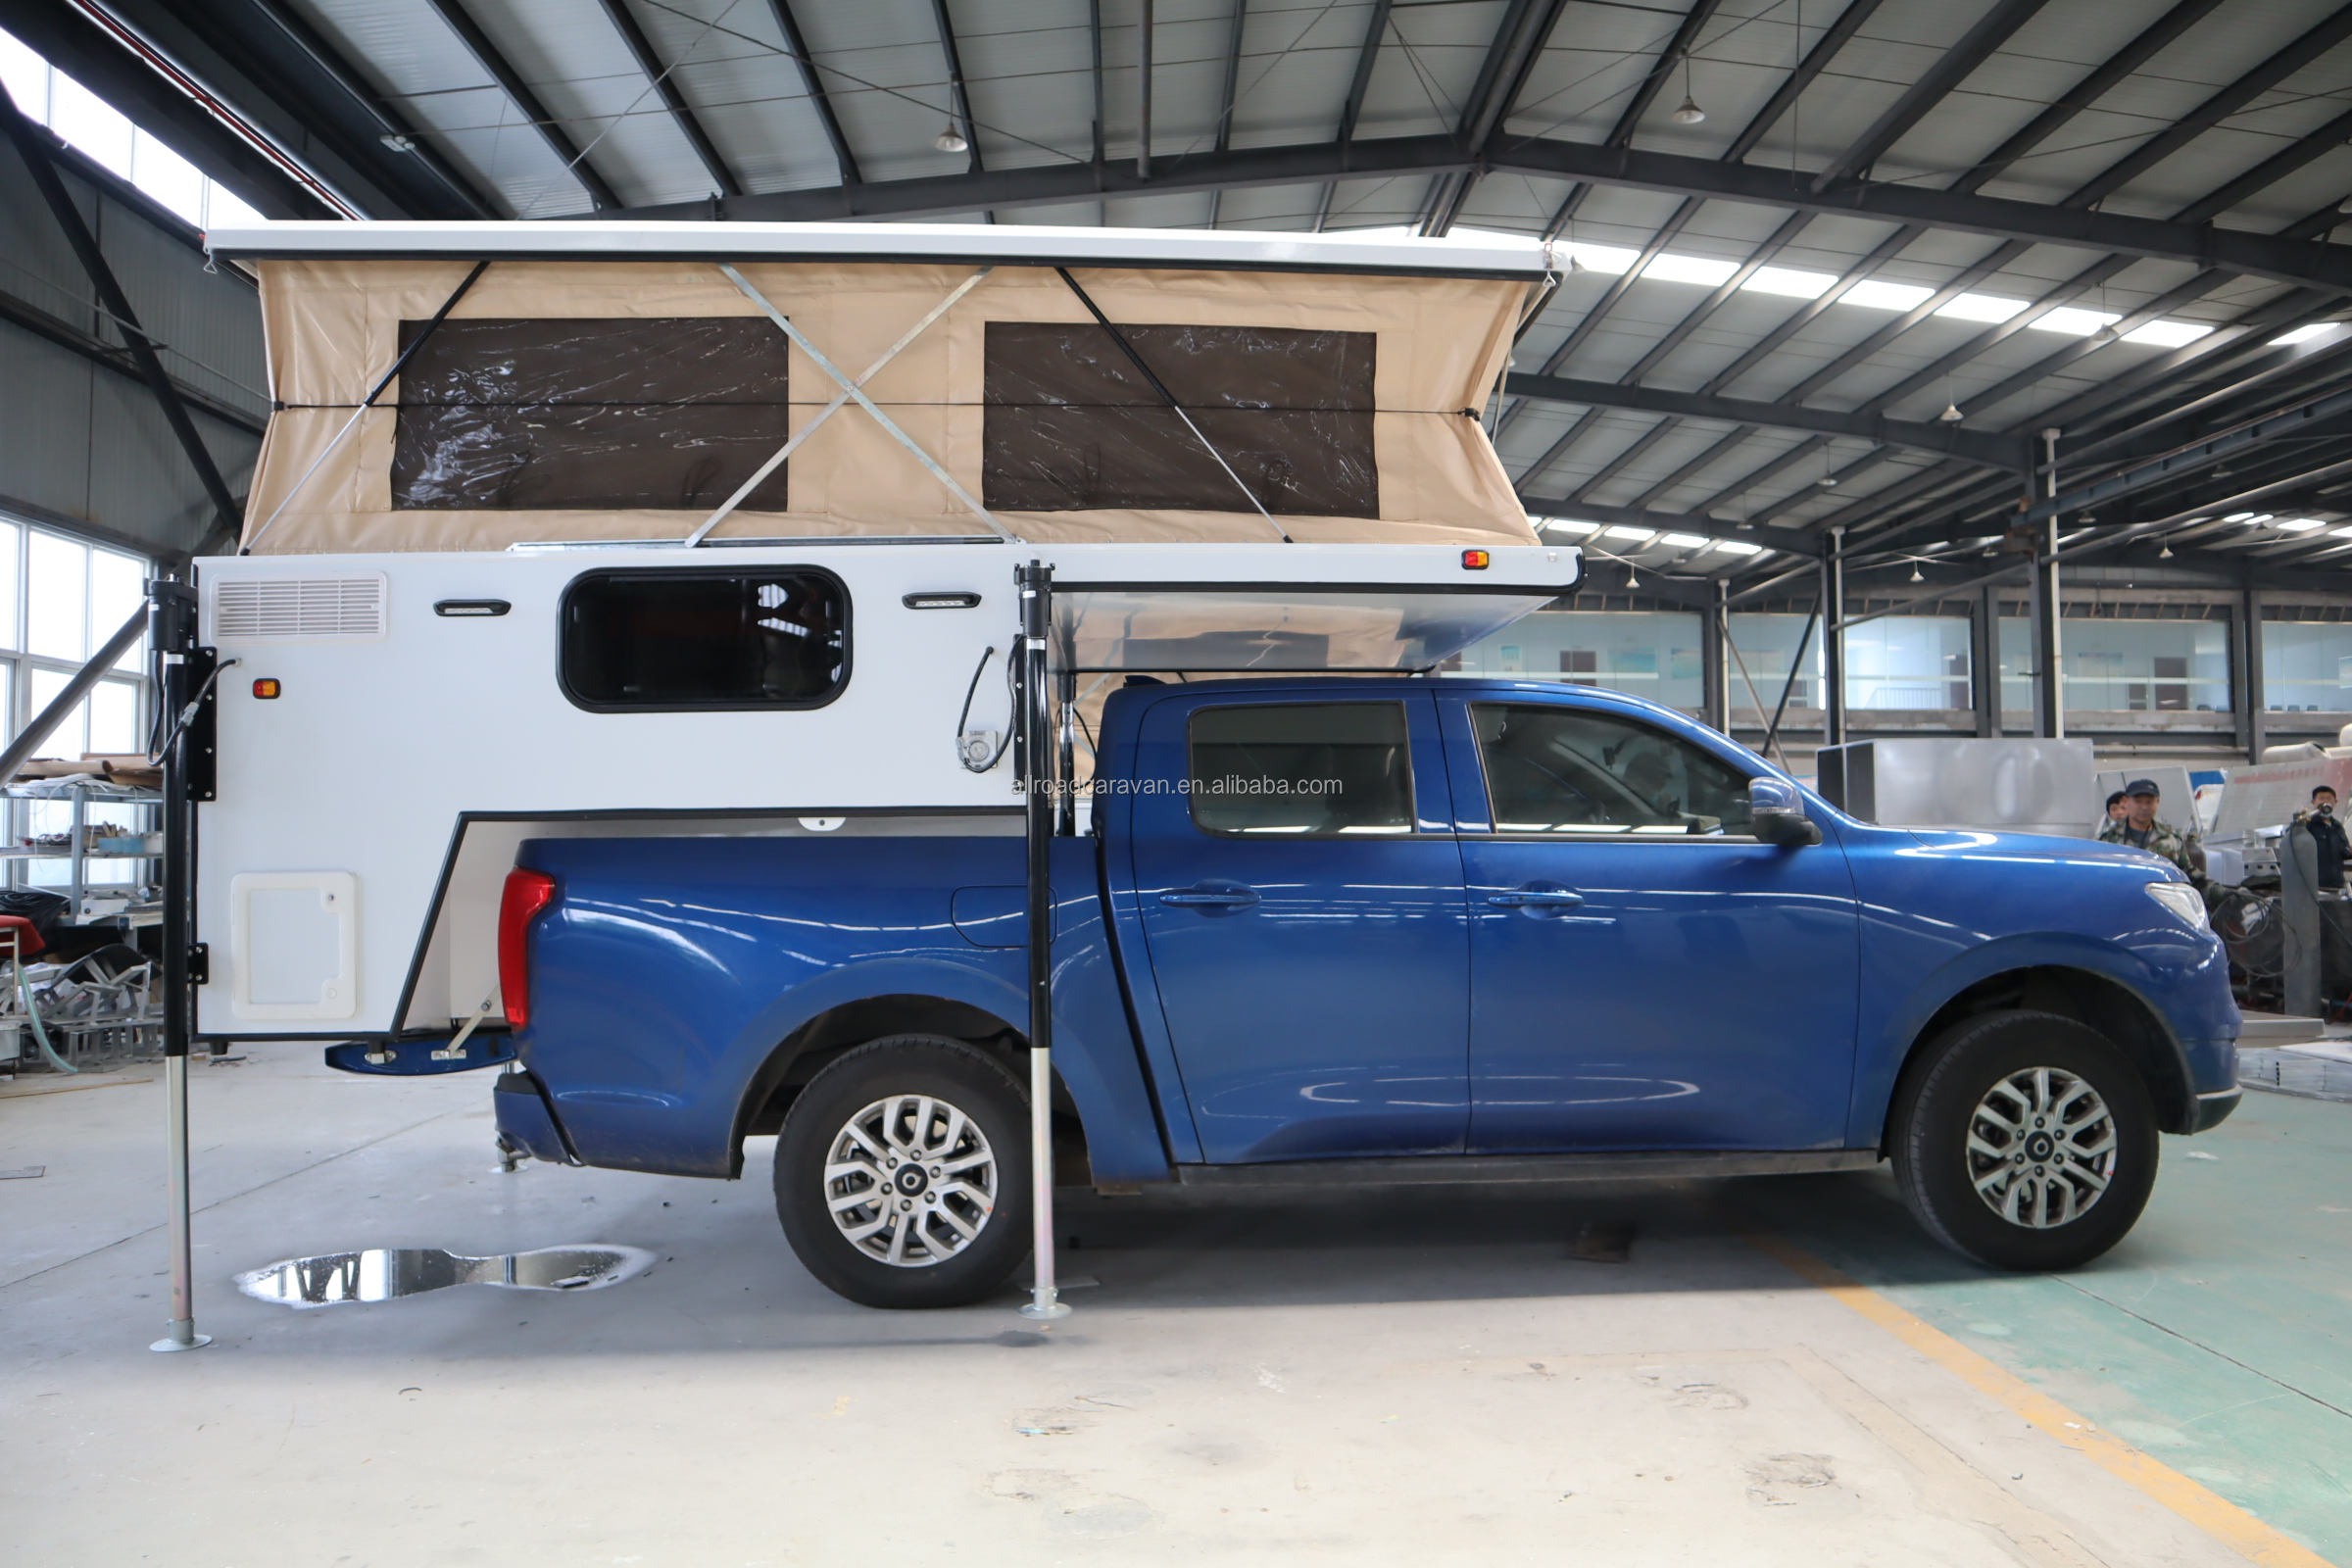 [Copy] Pickup truck slide in camper pop top caravan with low power consumption